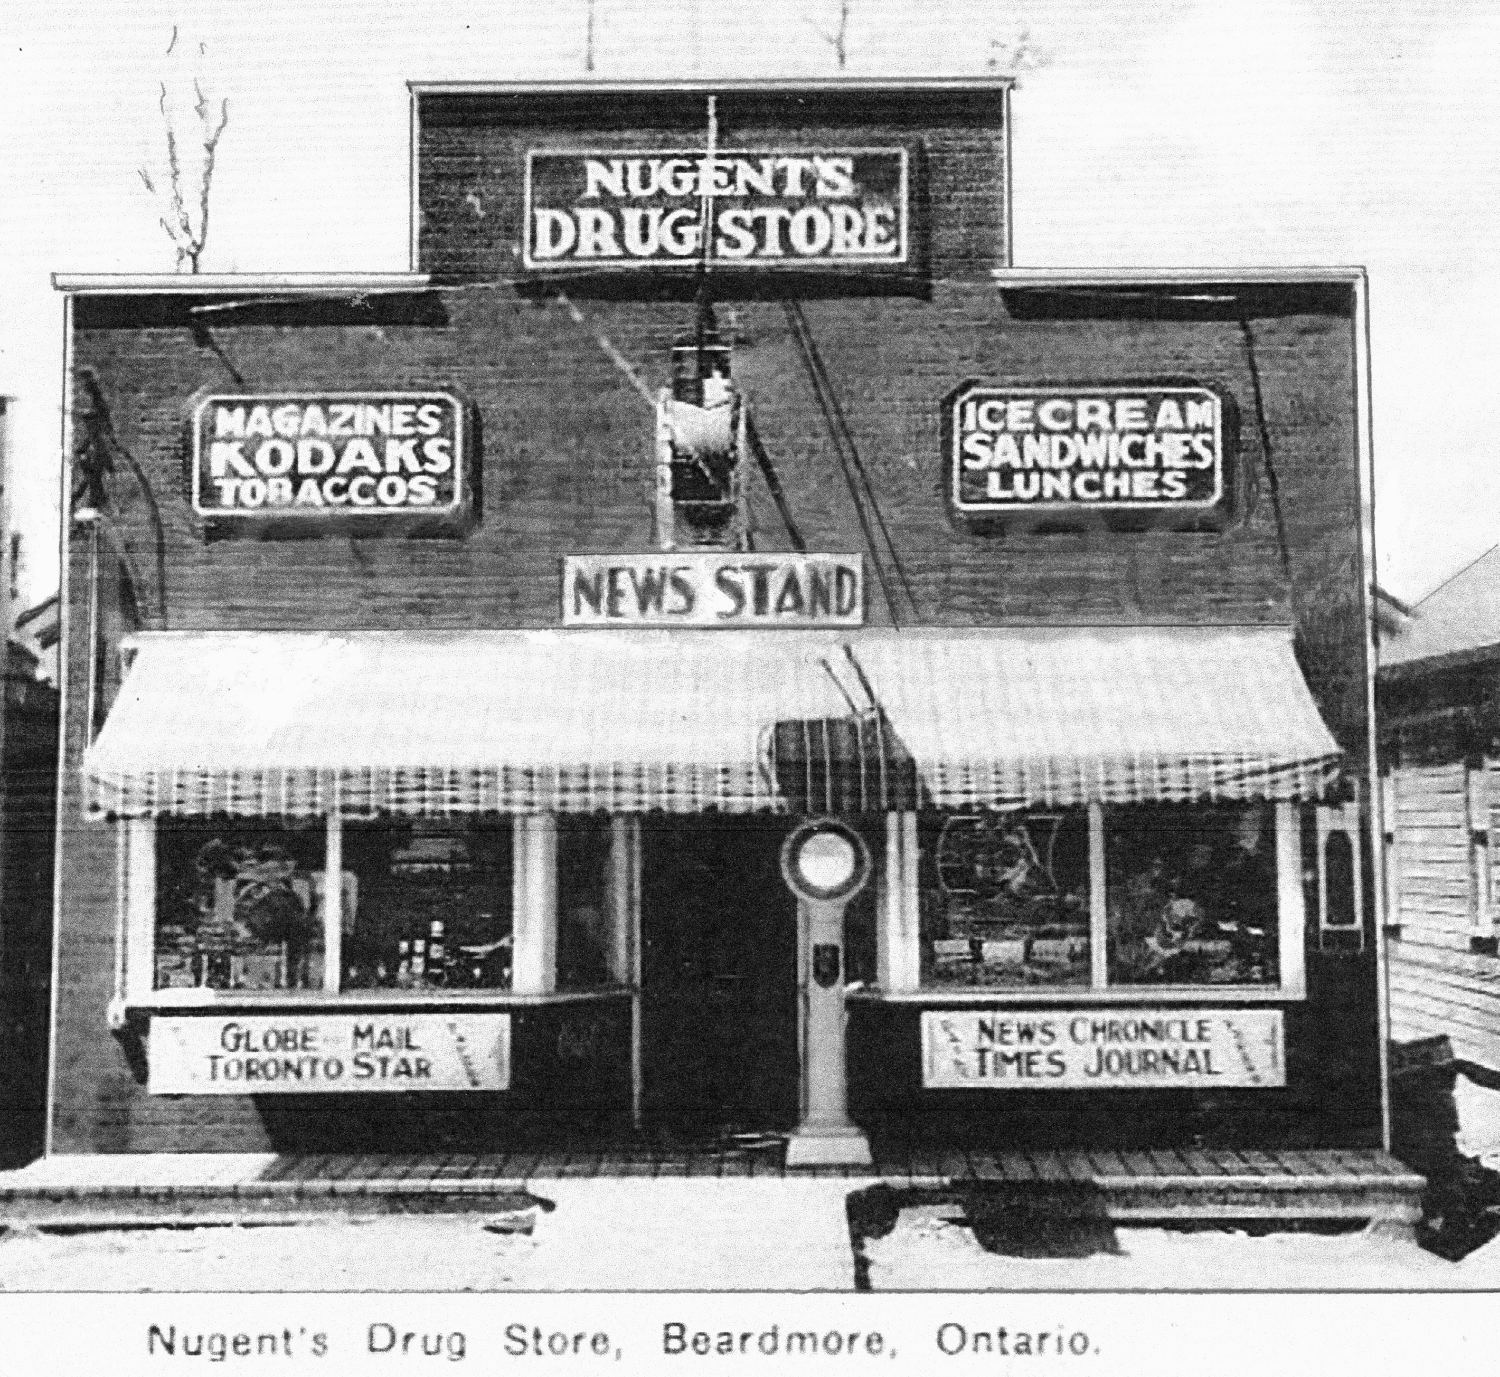 Beardmore, Ontario, Nugent's Drug Store